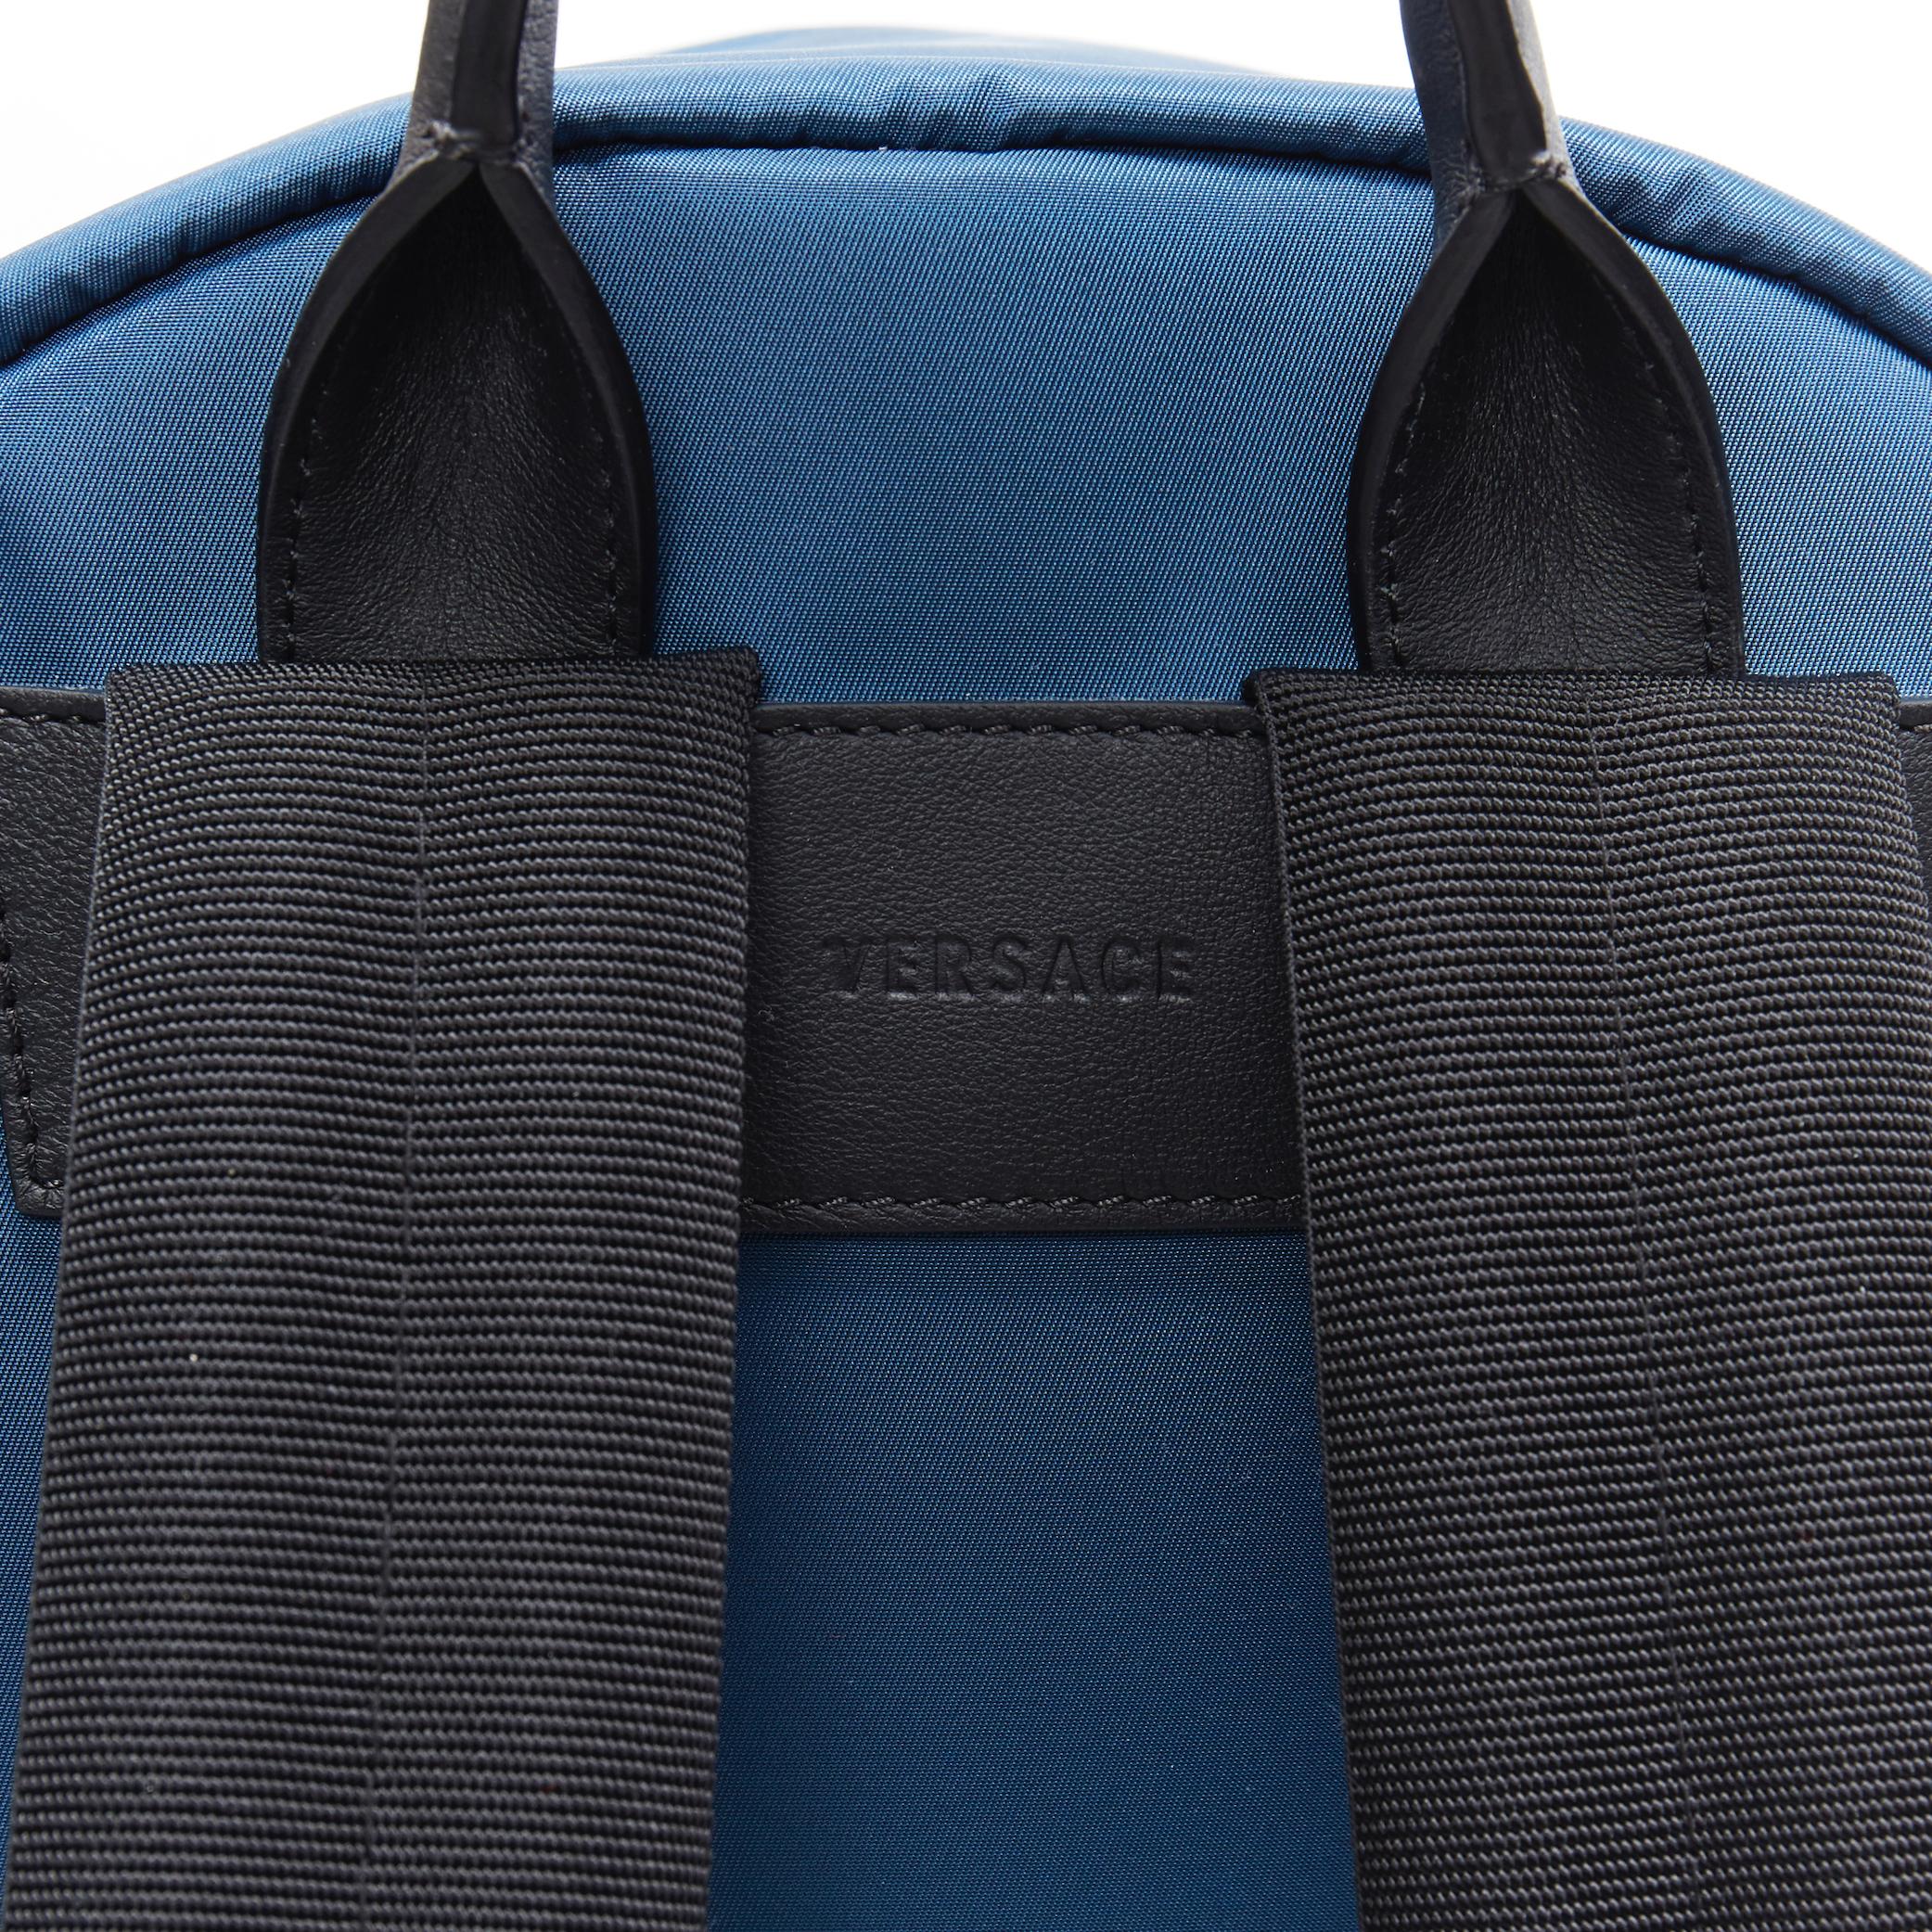 new VERSACE Palazzo Medusa navy blue nylon Greca pocket backpack bag 6